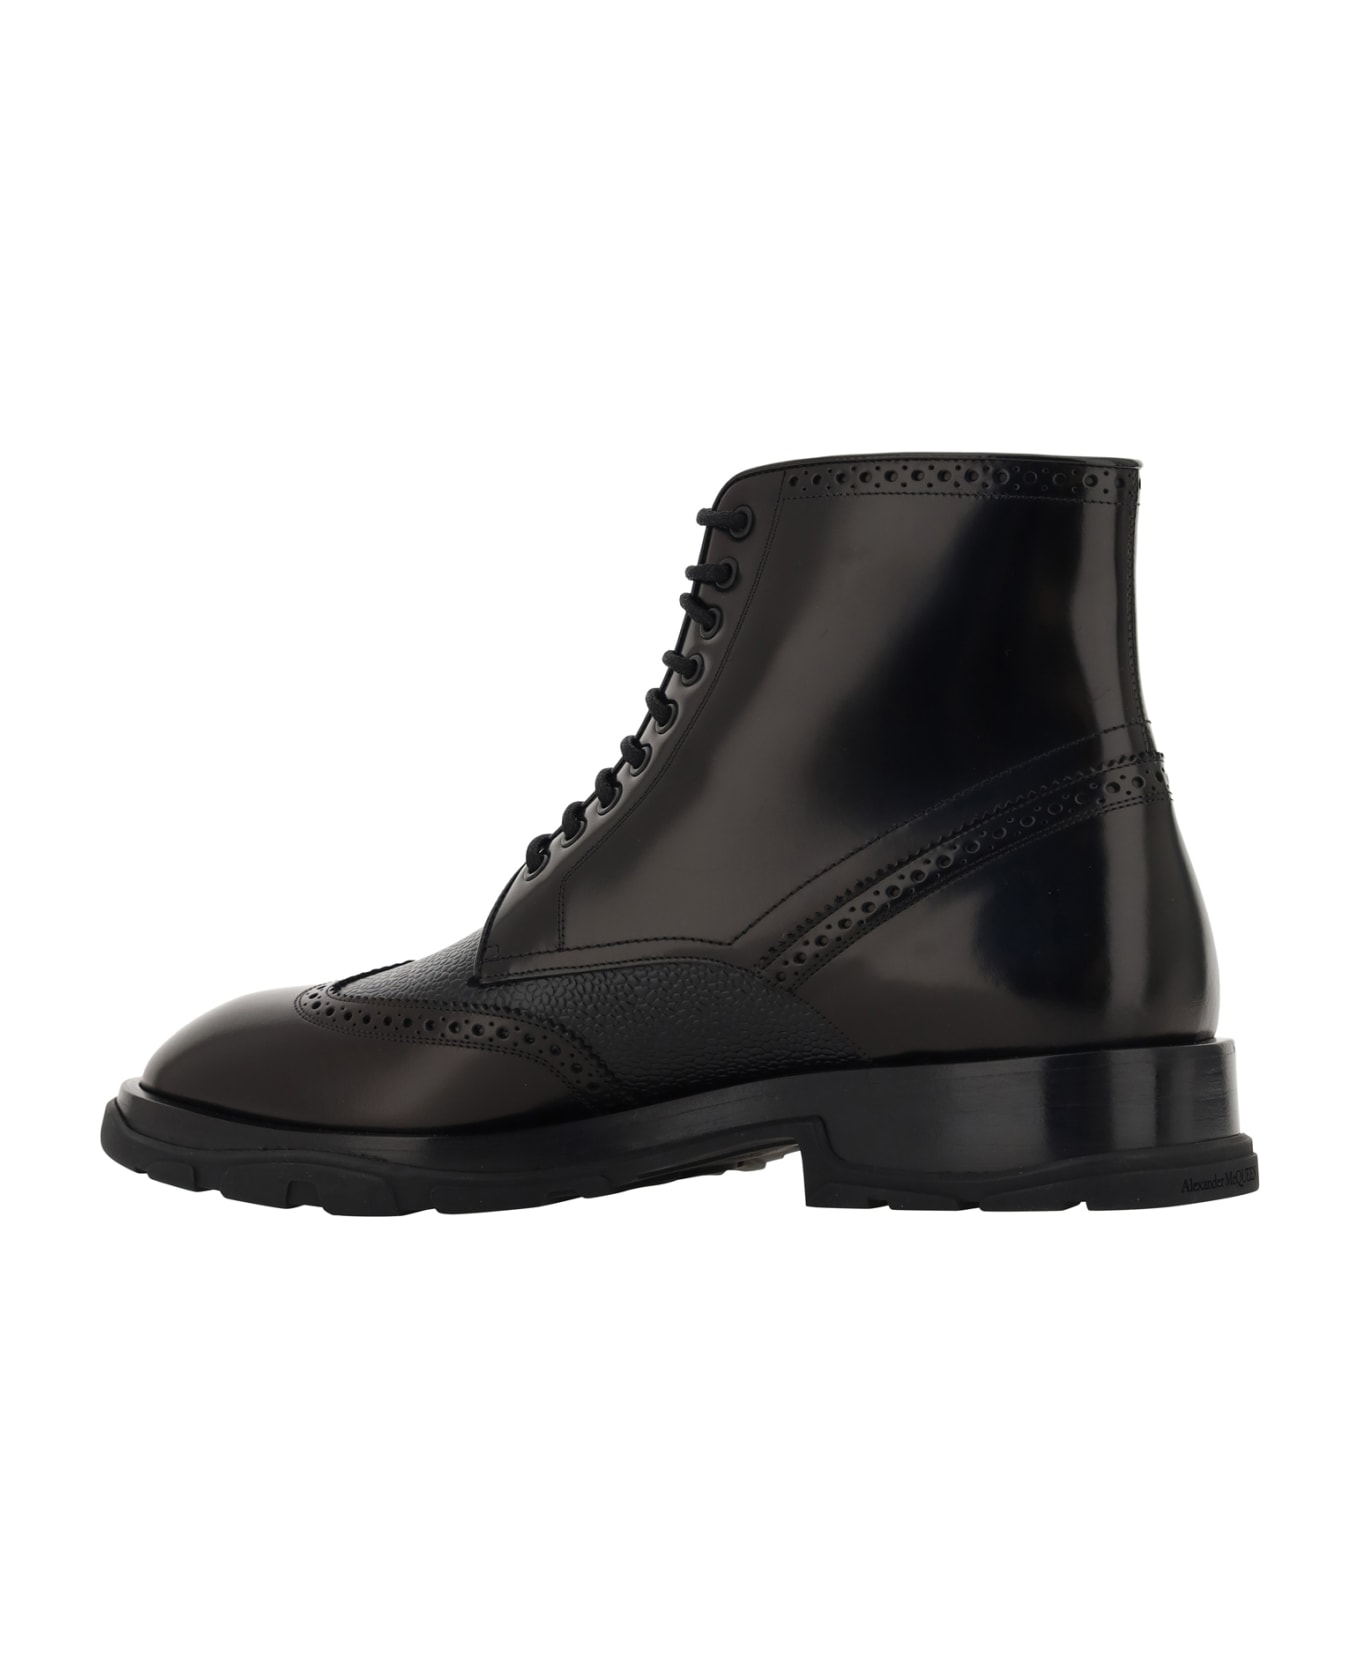 Alexander McQueen Lace Up Boots - Black/black/black